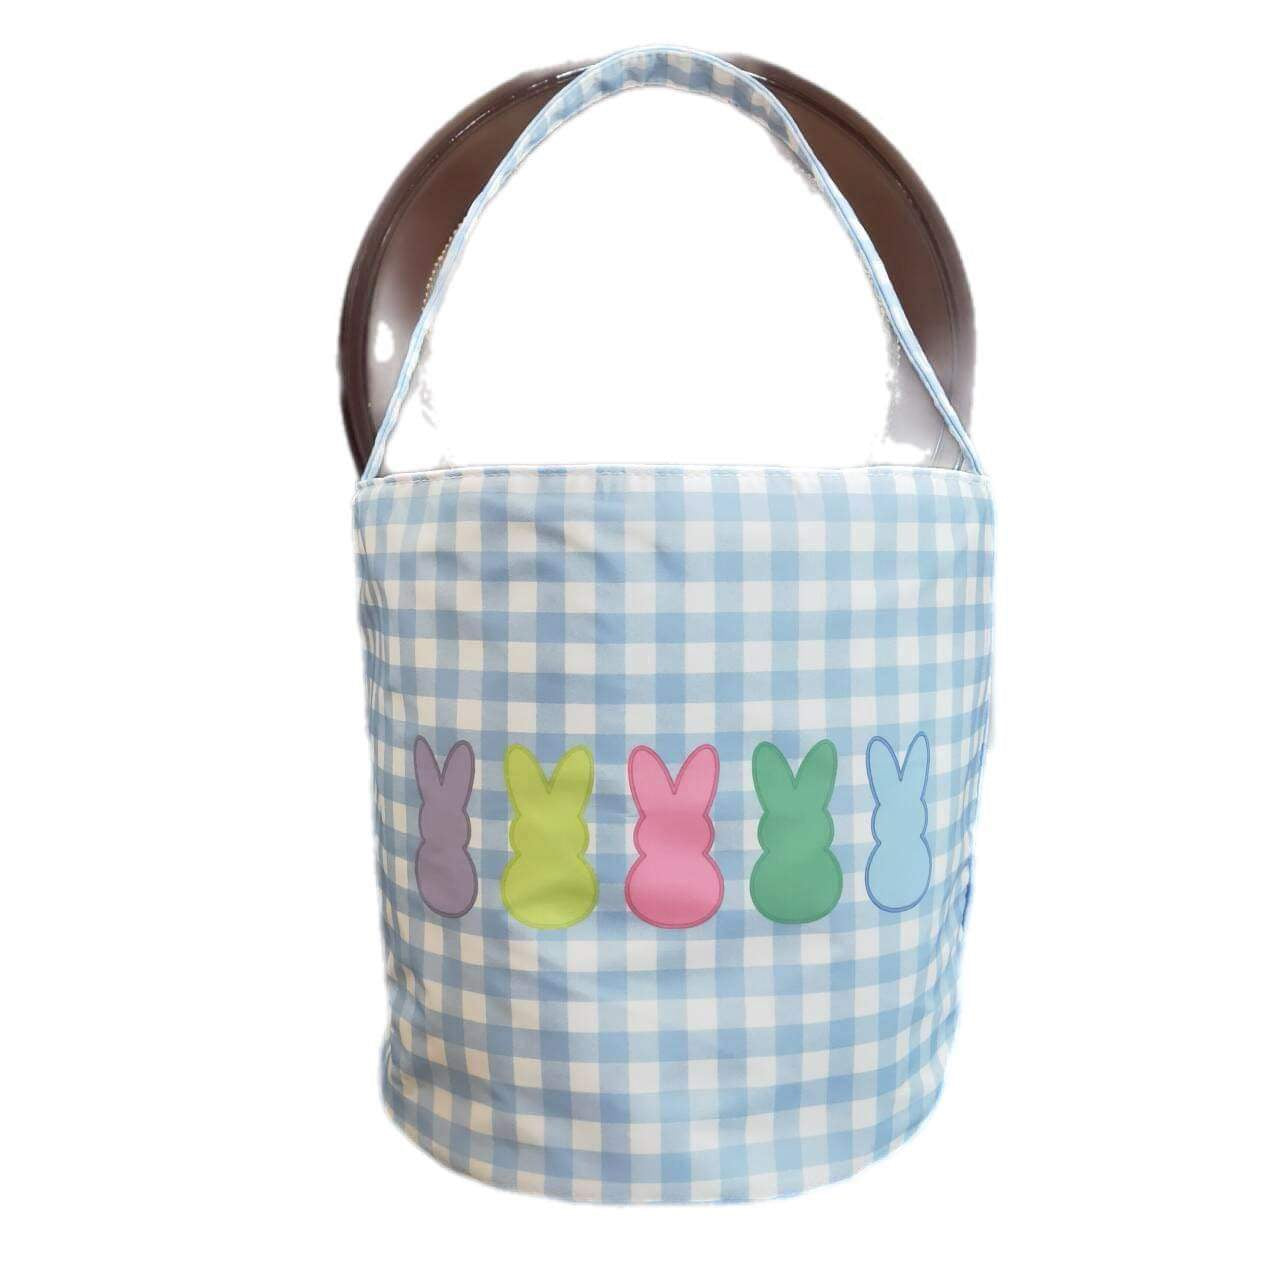 ᴡᴇᴇᴋʟʏ ᴘʀᴇ ᴏʀᴅᴇʀ Easter Blue Checkered Basket with Bunnies